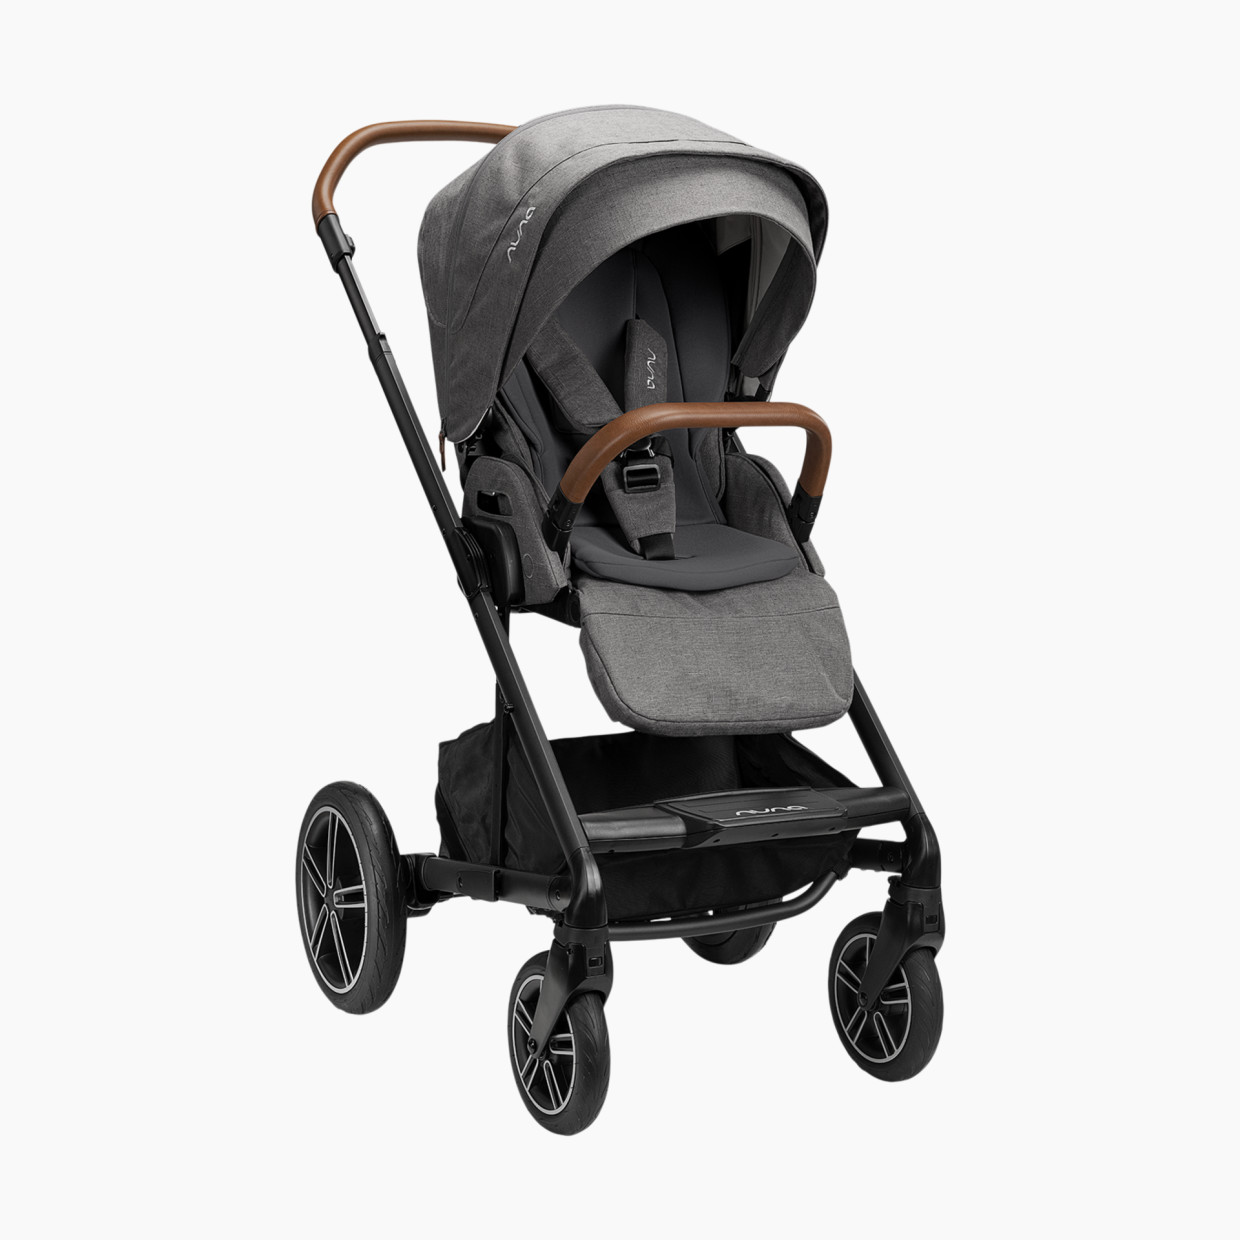 Nuna MIXX Next Stroller with Mag Buckle - Granite.